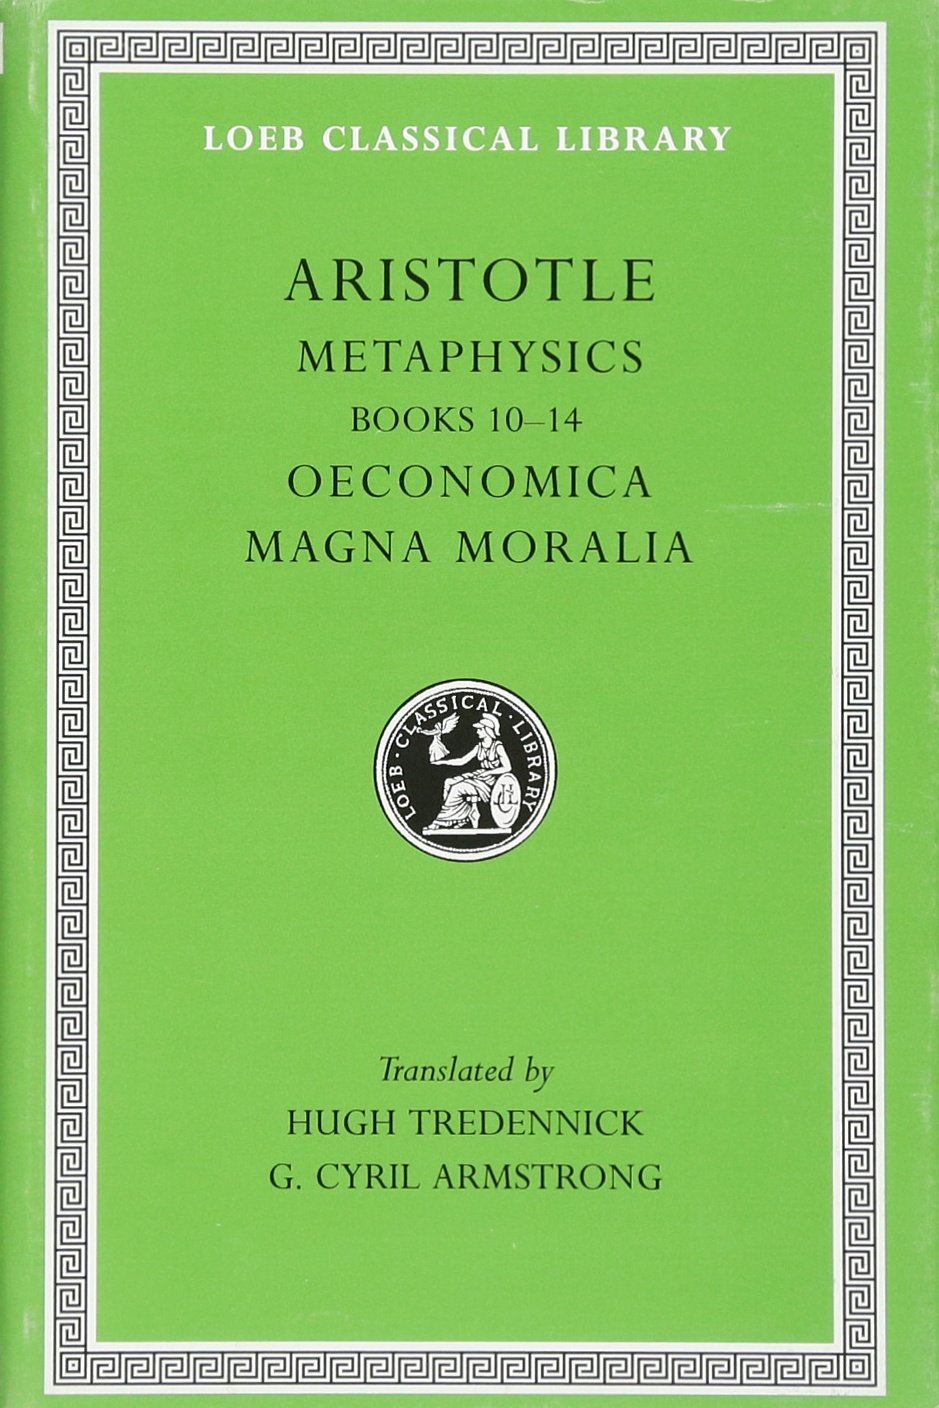 metaphysics by aristotle